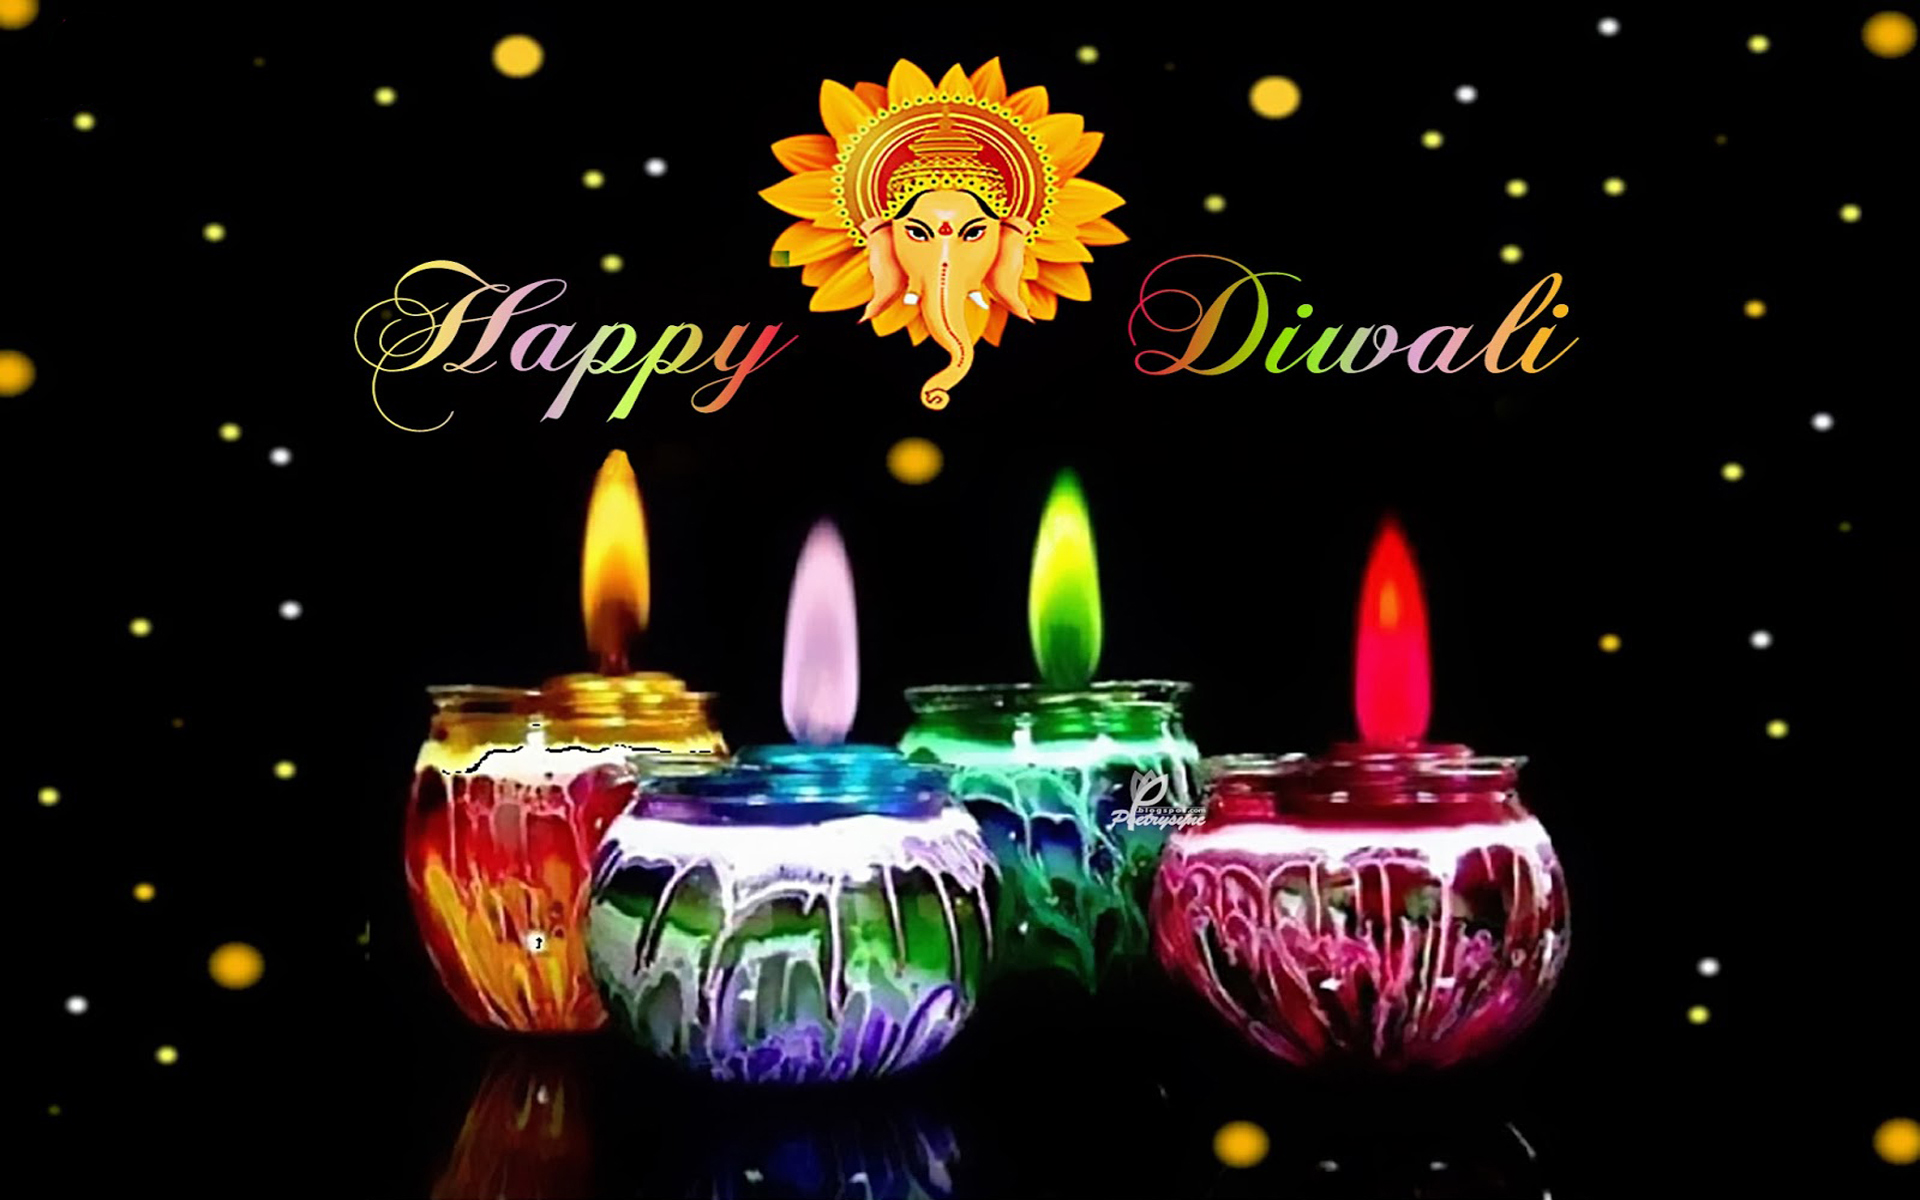 Happy Diwali Full Hd Diwali Wallpapers And Greeting Cards 1920x1200